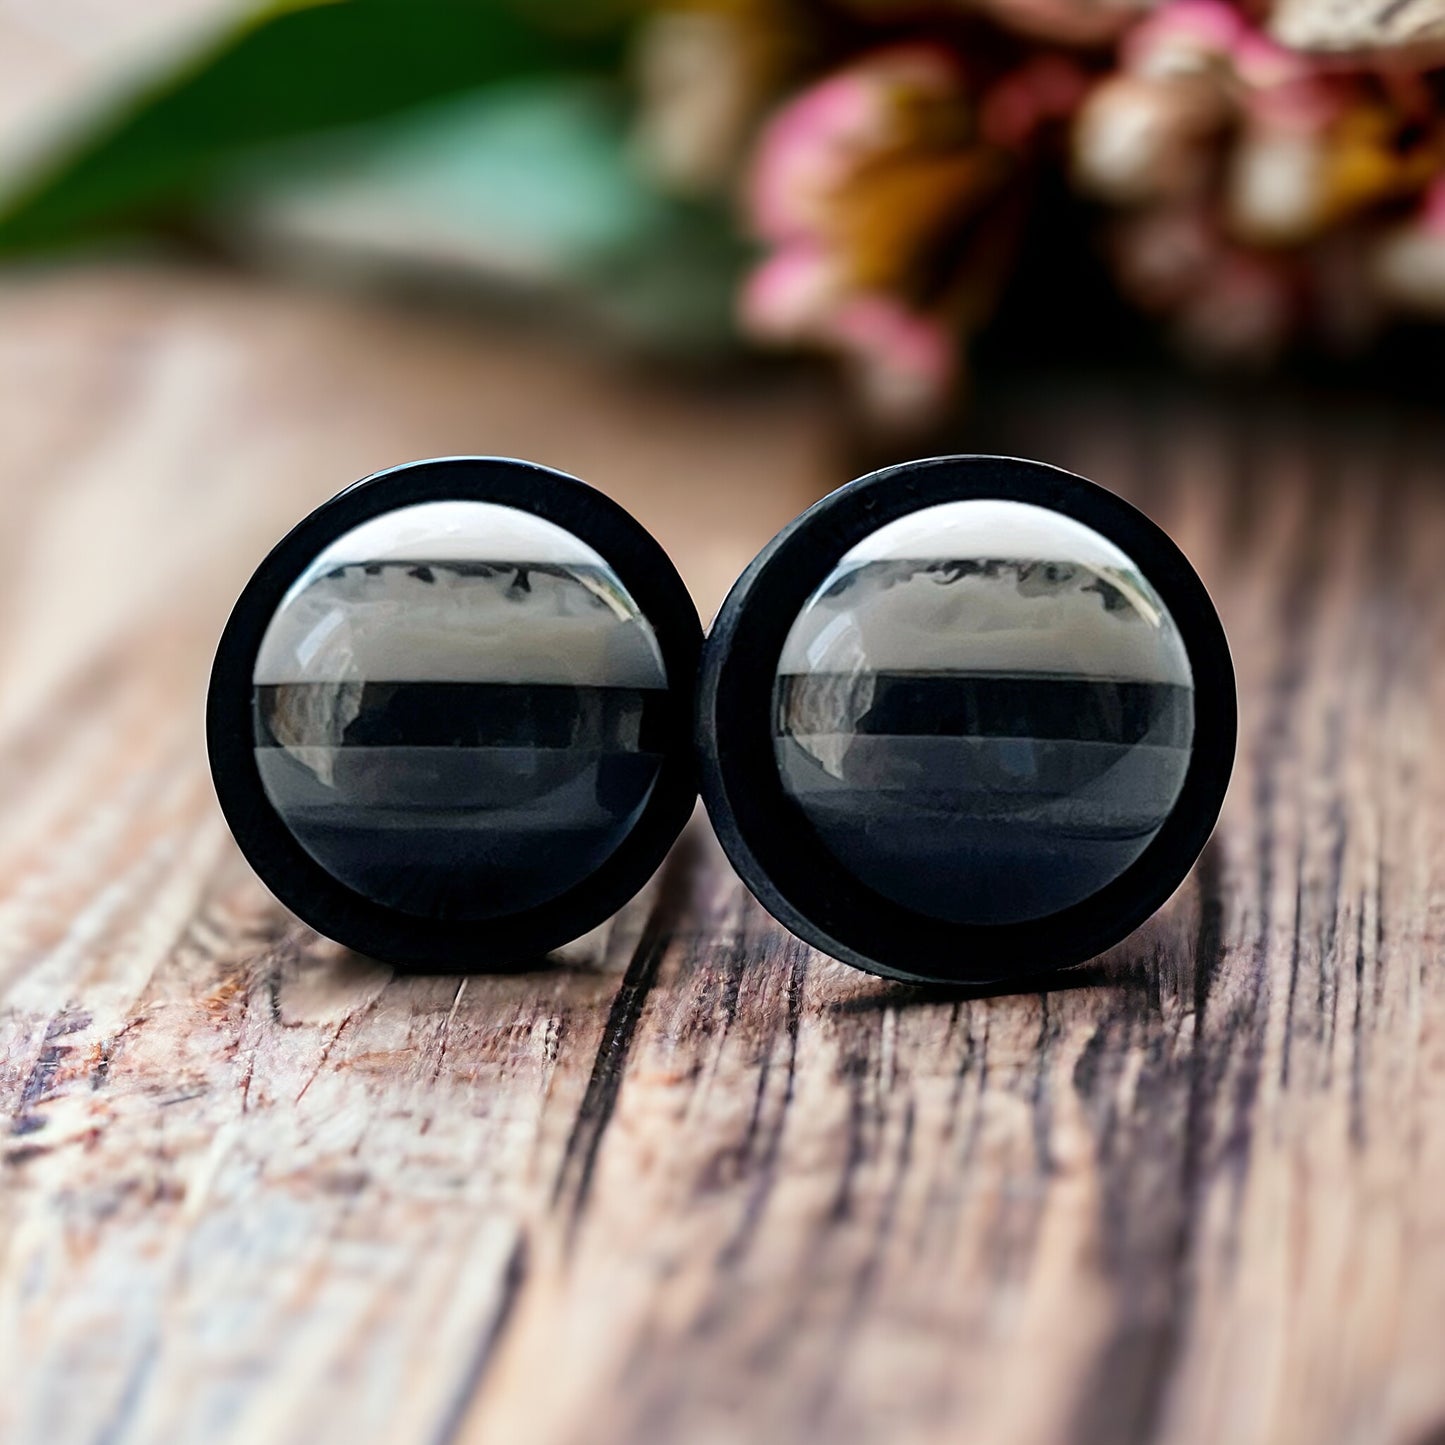 Black & White Gradient Striped Wood Earrings - Stylish Monochrome Accessories